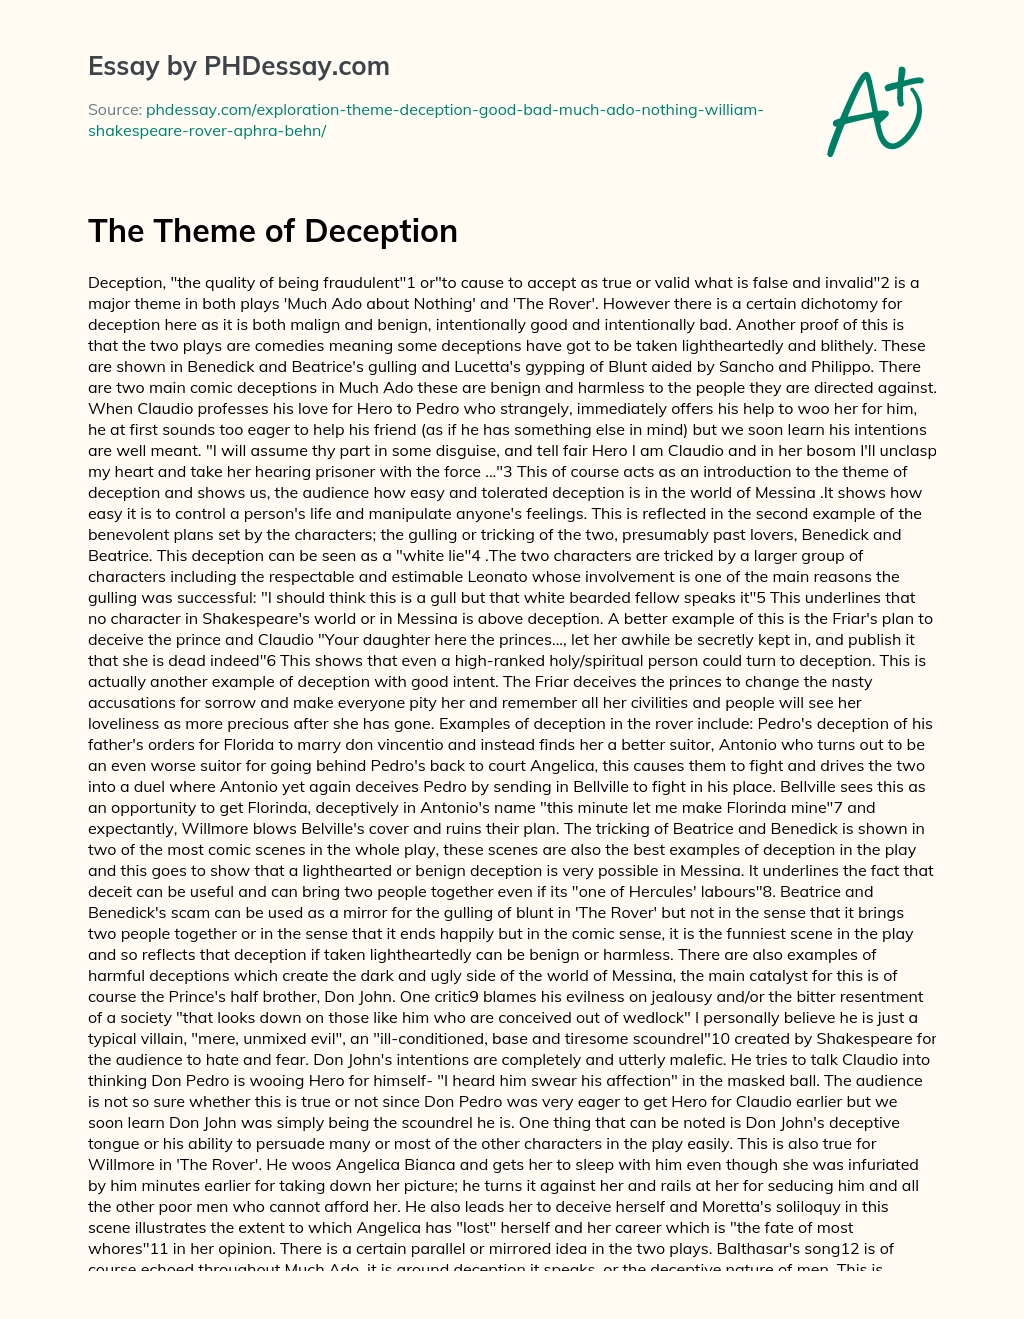 The Theme of Deception essay